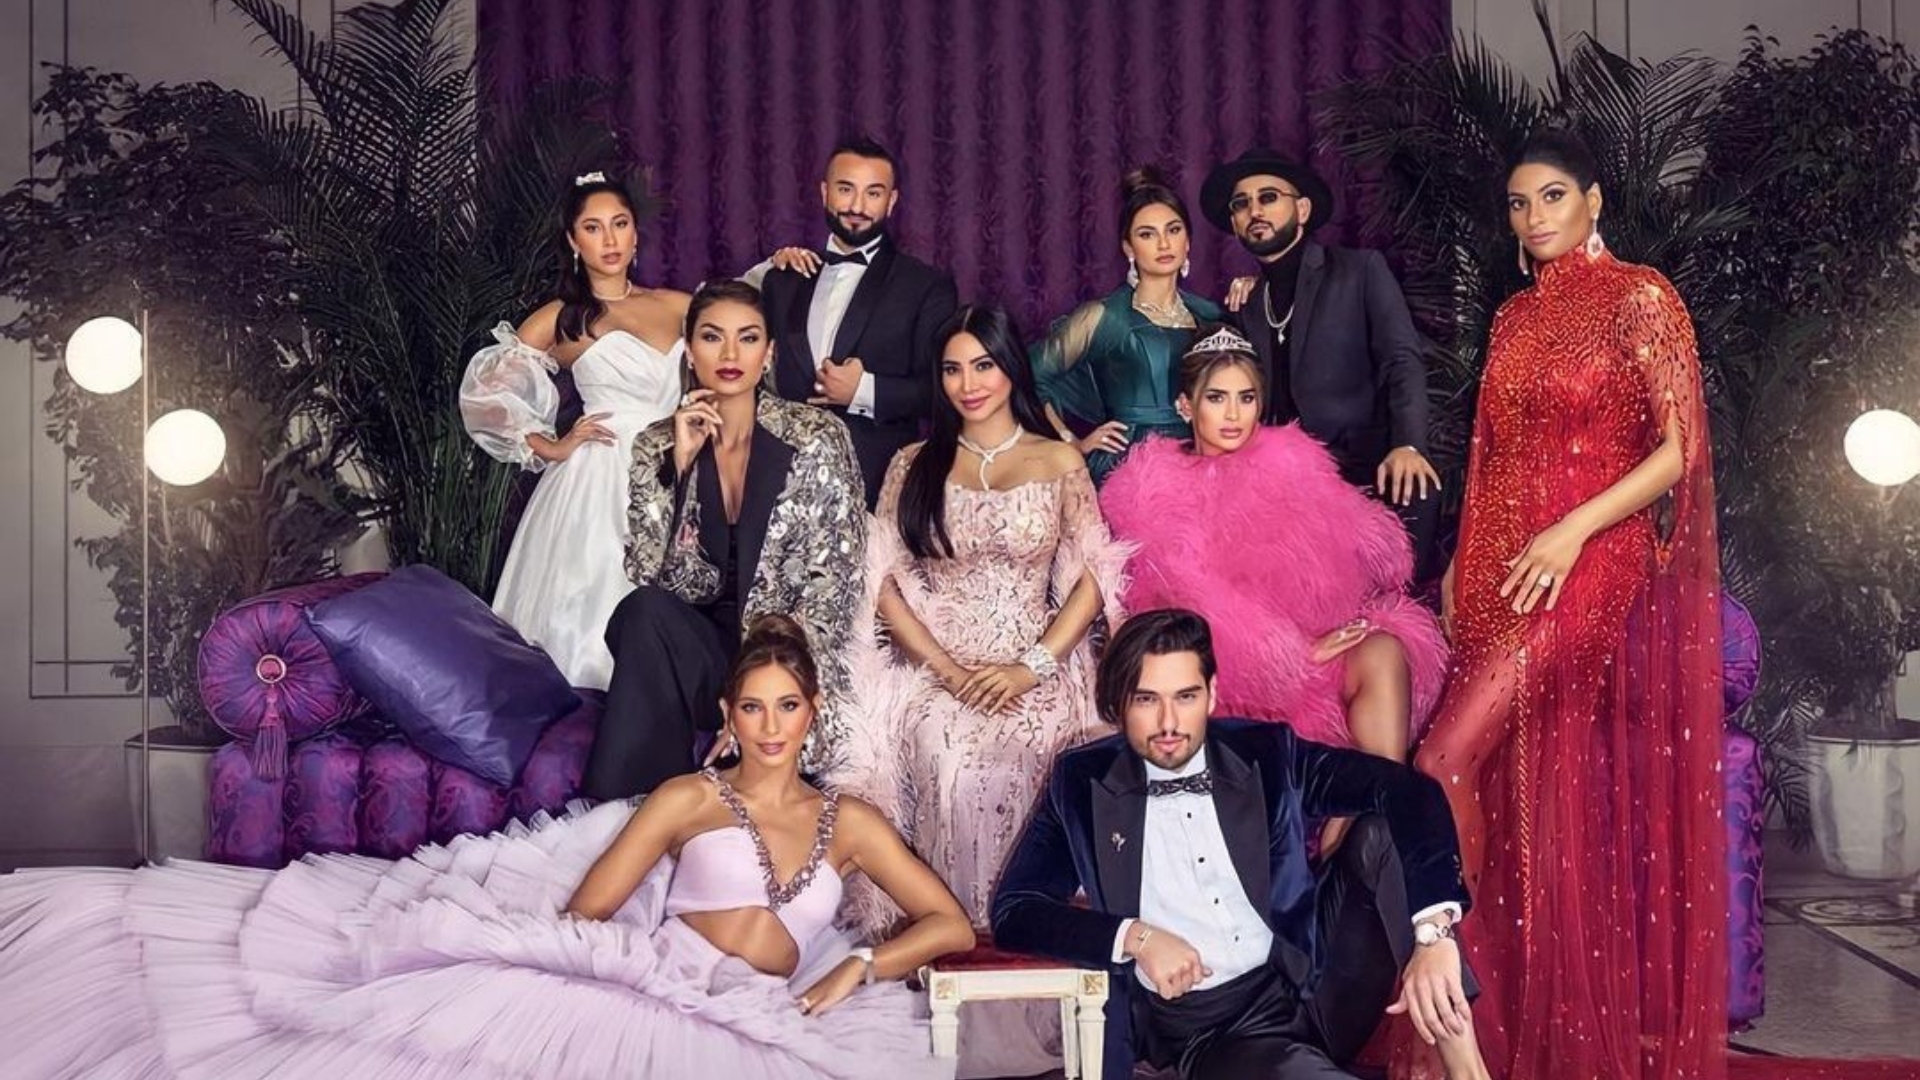 Exciting Peek Dubai Bling Season 2 Sparks Major Buzz with New Drama and Star-Studded Cast on Netflix--